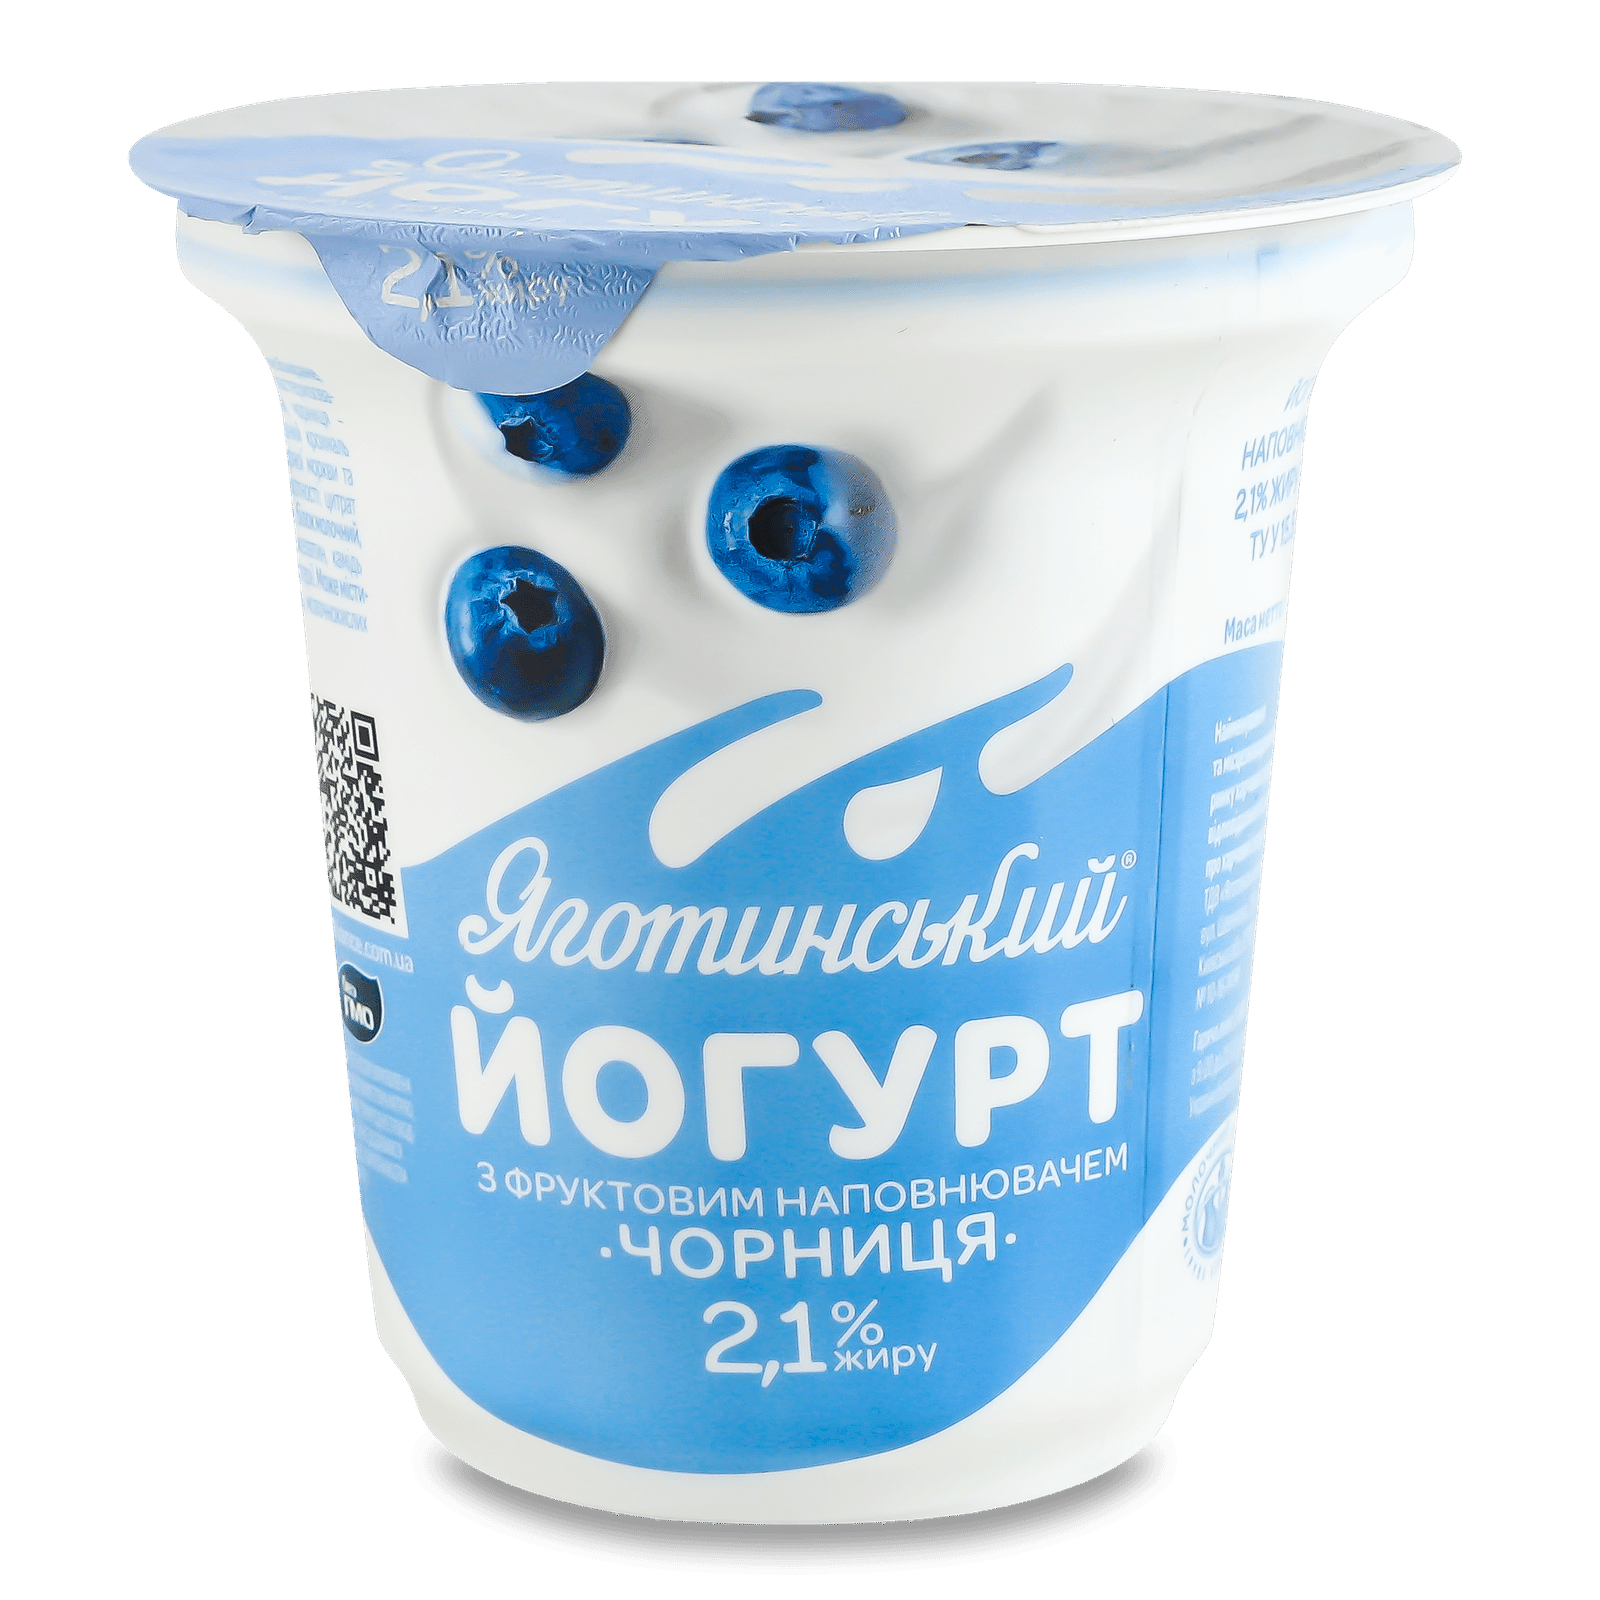 Йогурт Яготинський чорниця 2,1% - 1